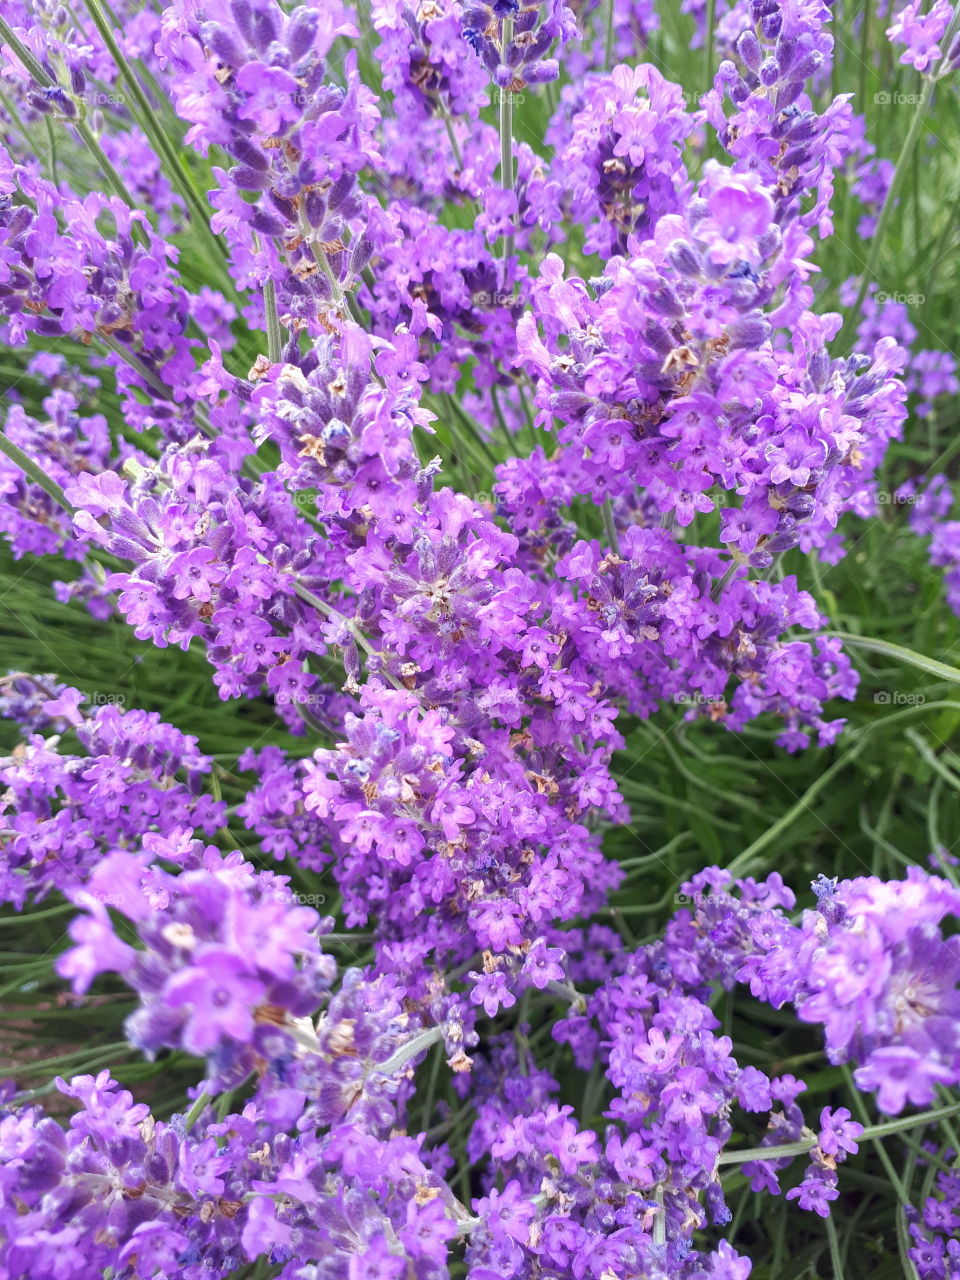 Lilac Lavender bush.